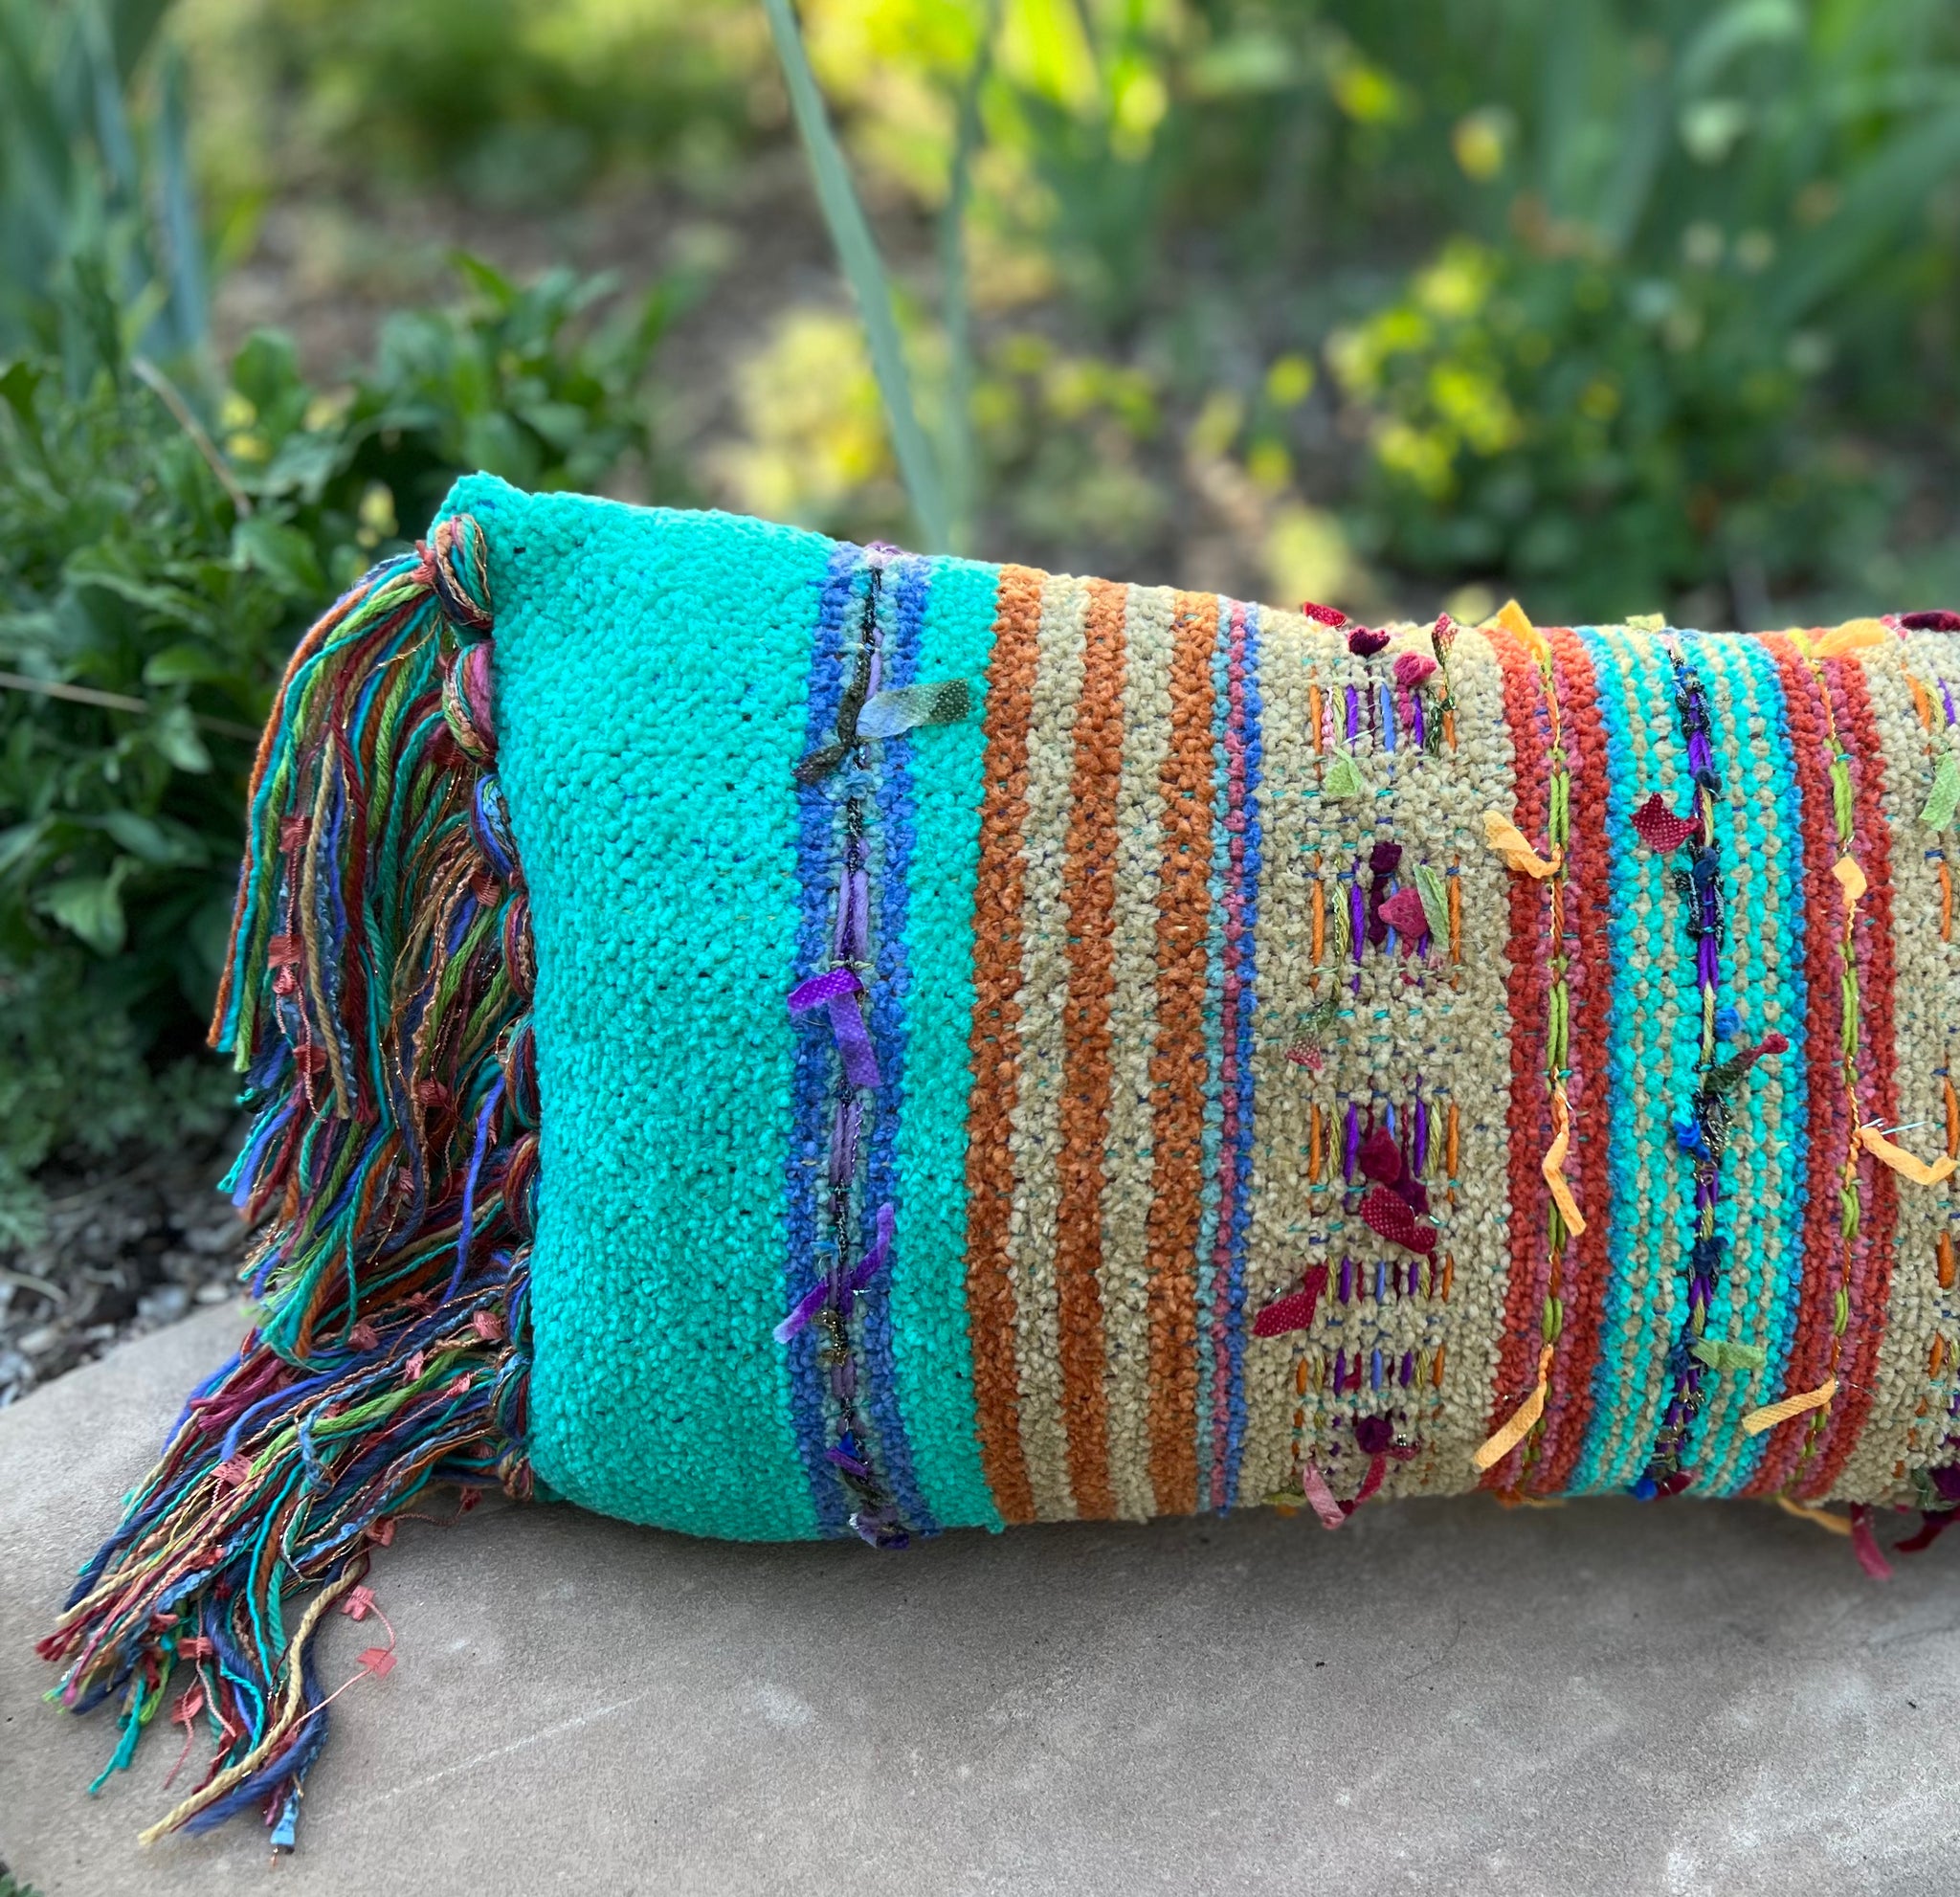 Gretel Underwood "Cachucha" pillow handmade in Santa Fe, NM